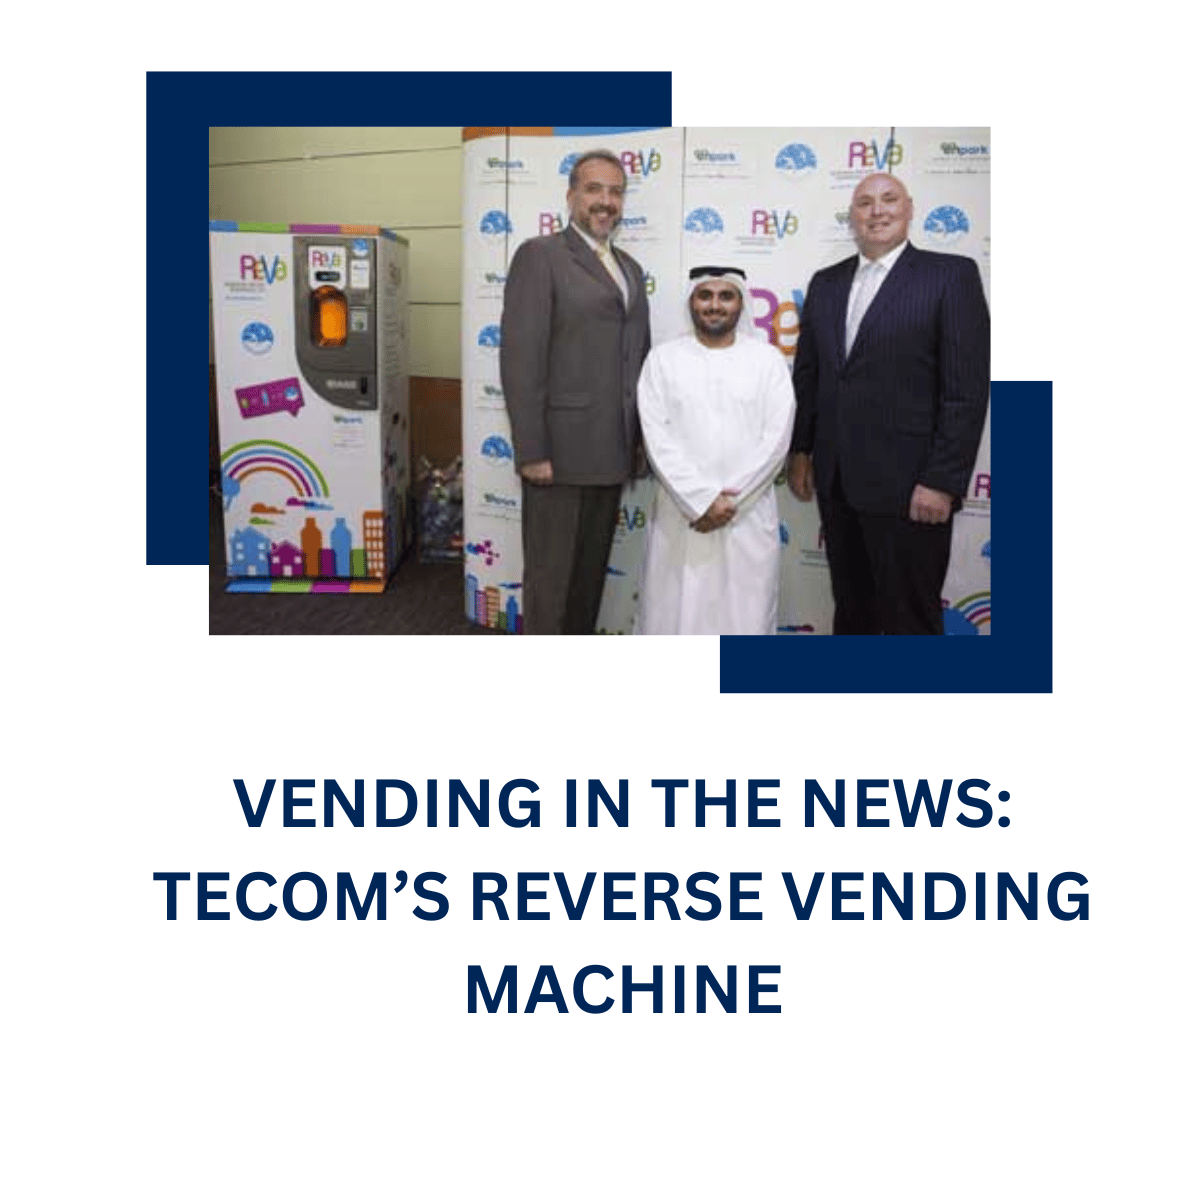 VENDING IN THE NEWS: TECOM’S REVERSE VENDING MACHINE